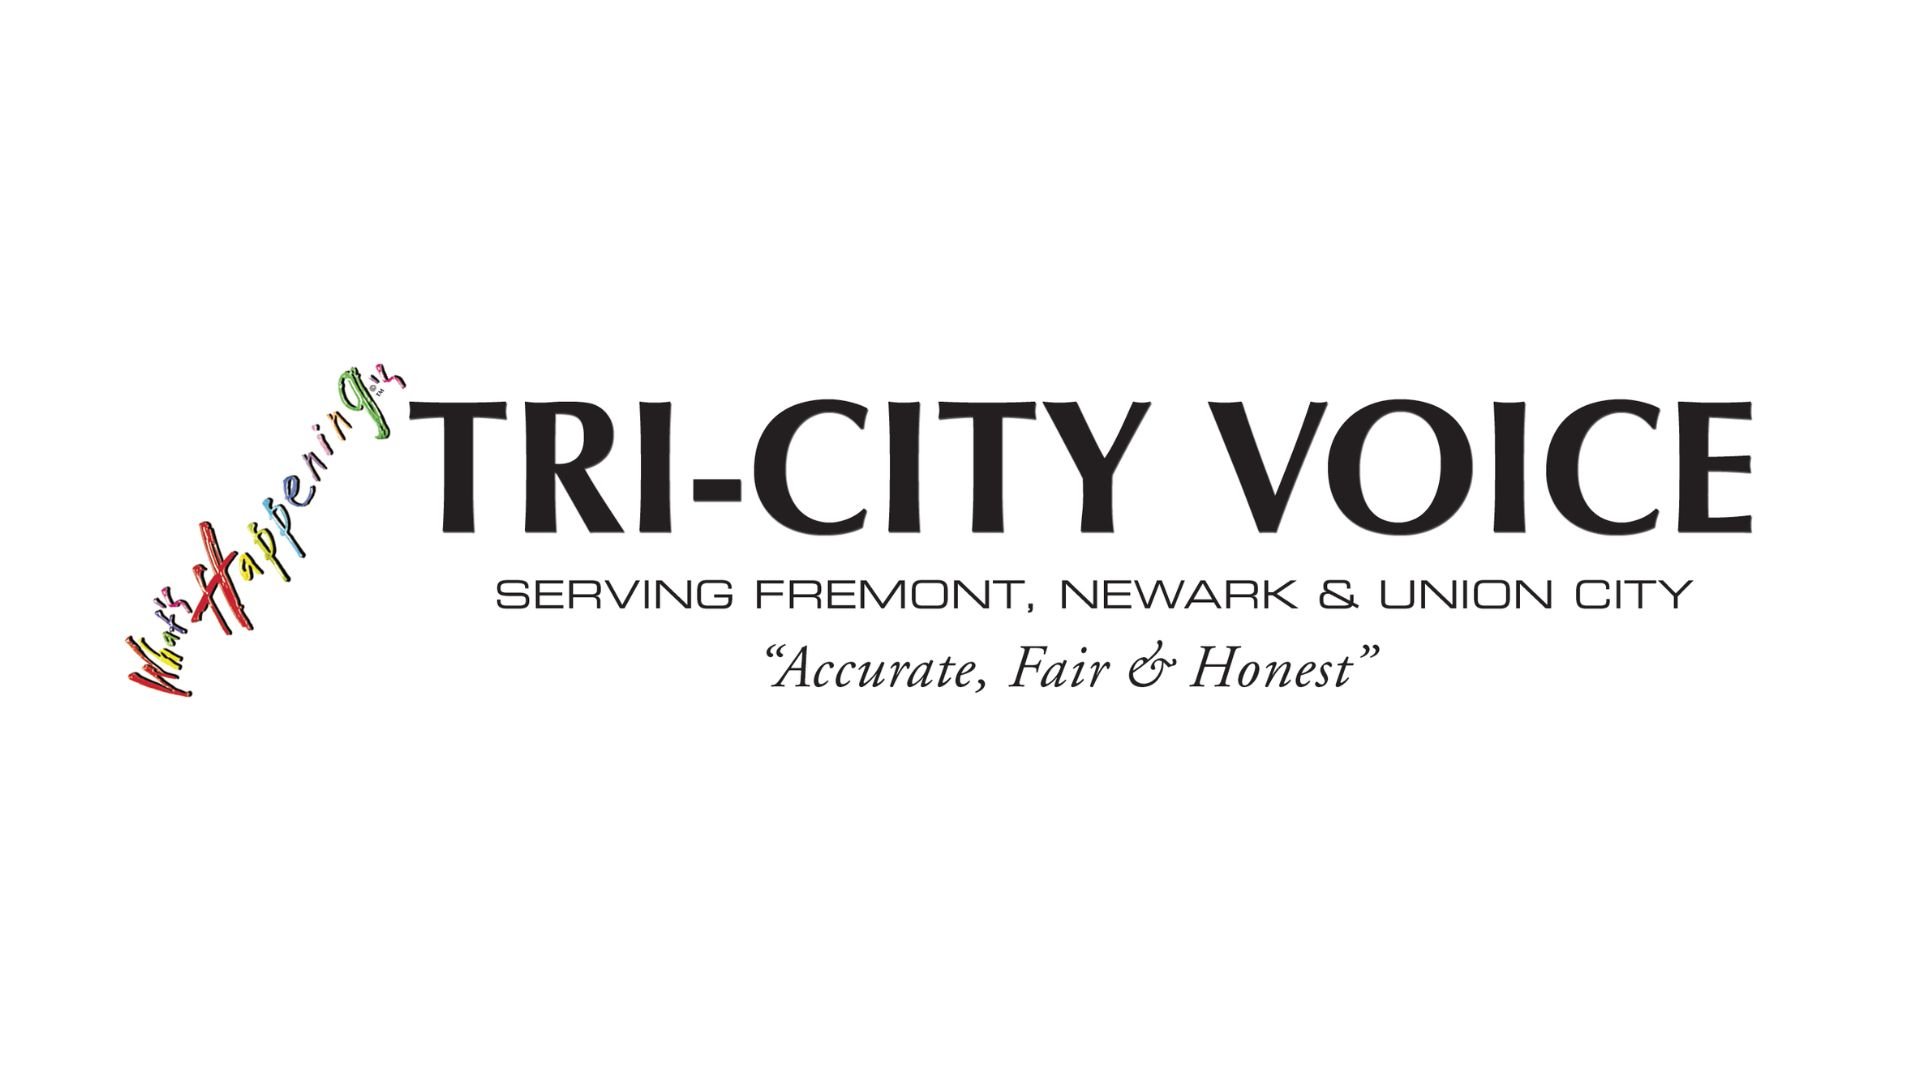 Tri City Voice 1920x1080.jpg